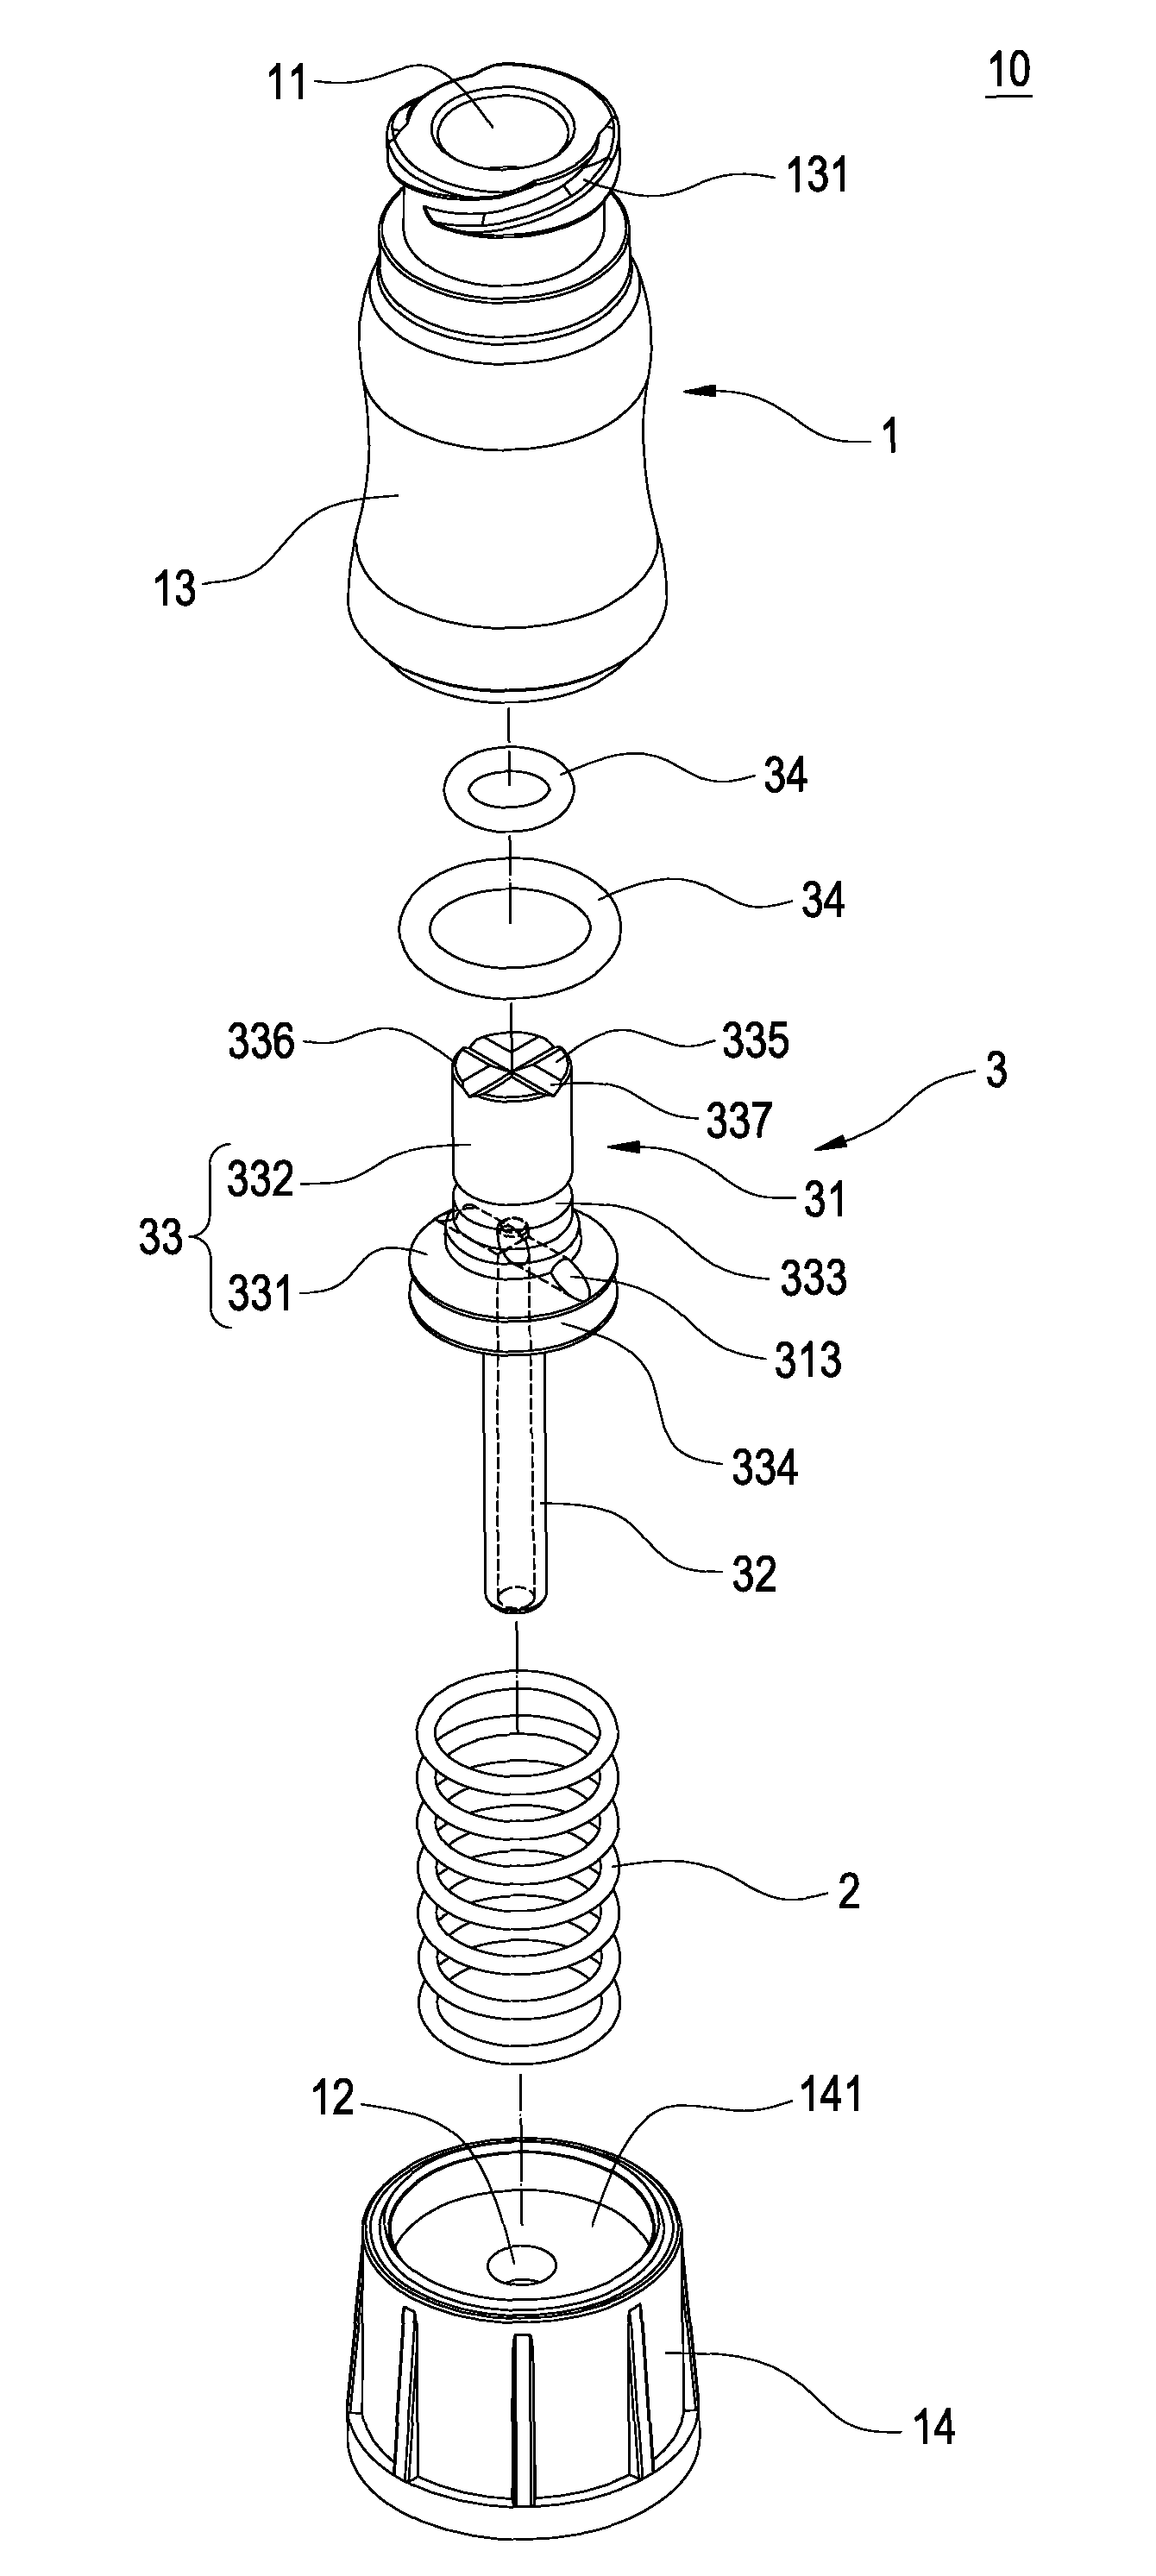 Needleless connector